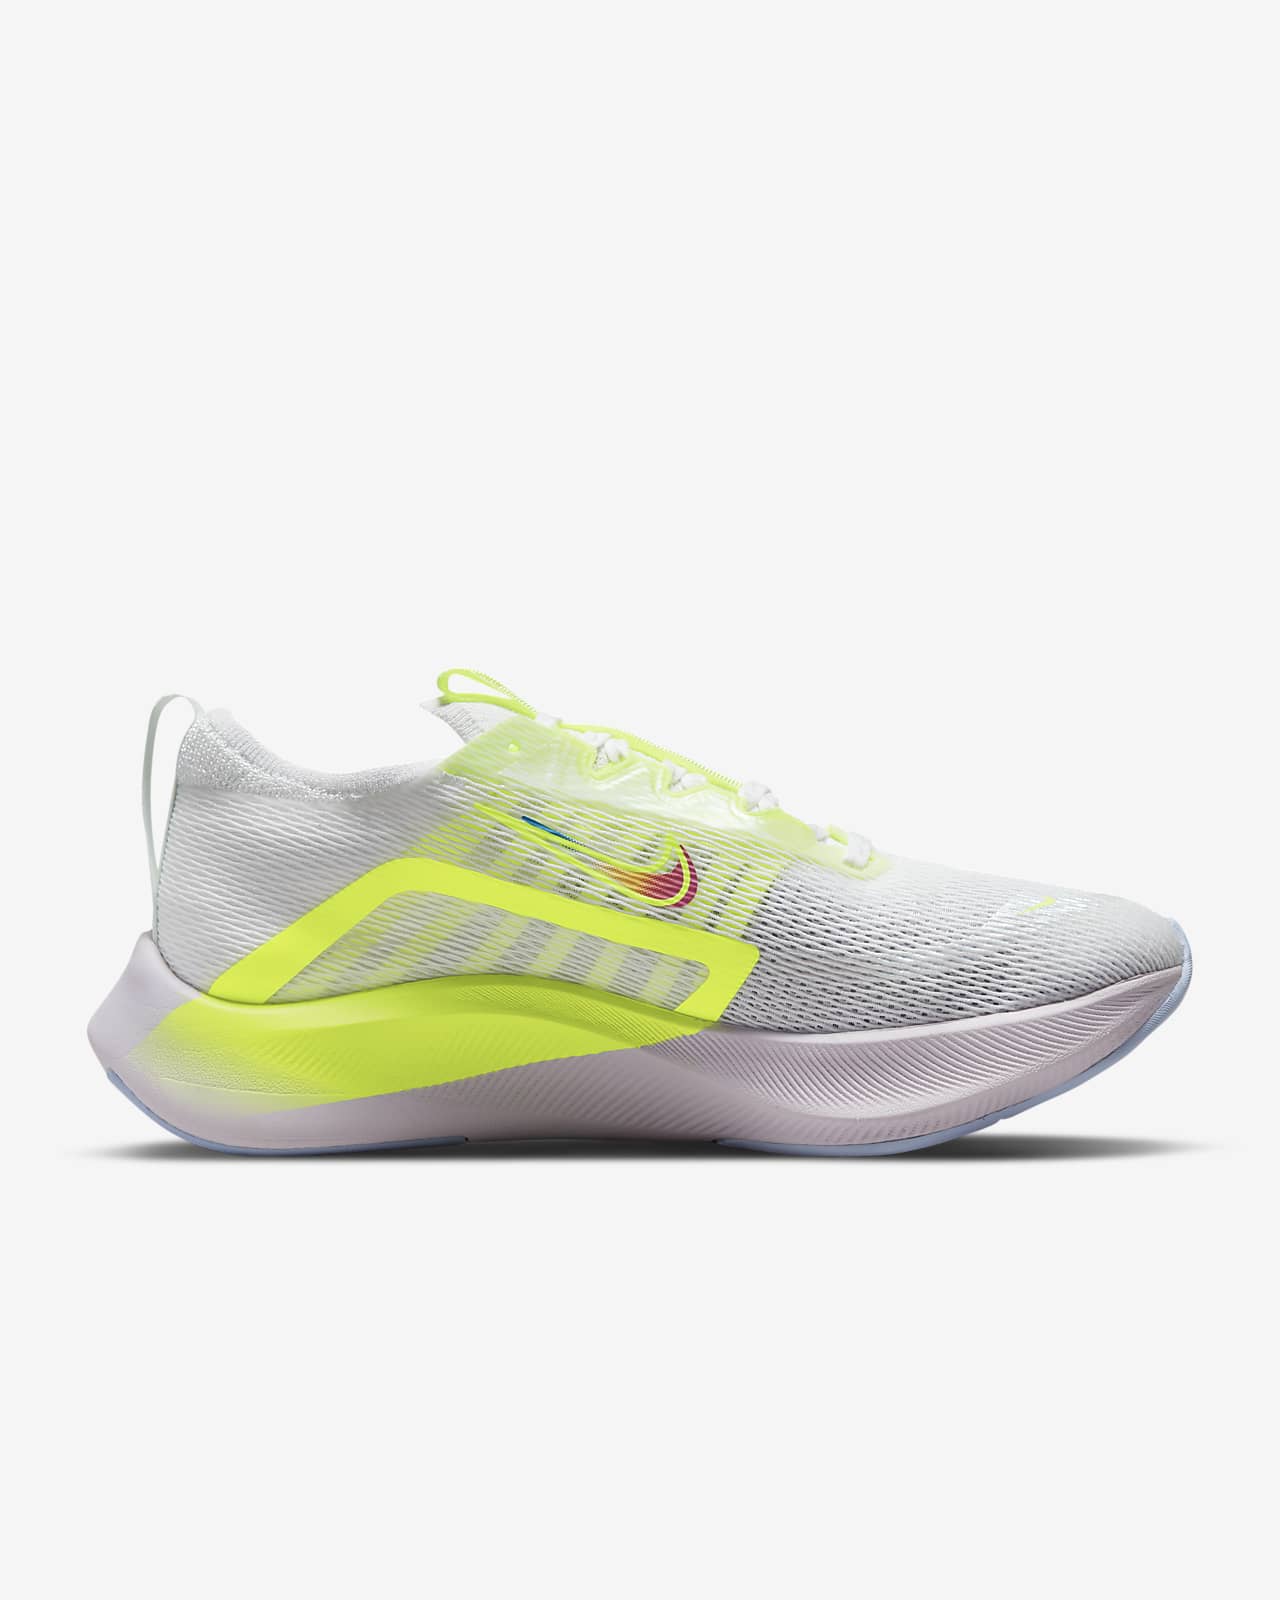 Nike Zoom Fly 4 Premium Women's Road Running Shoes بطاقة تهنئة بالانجليزي